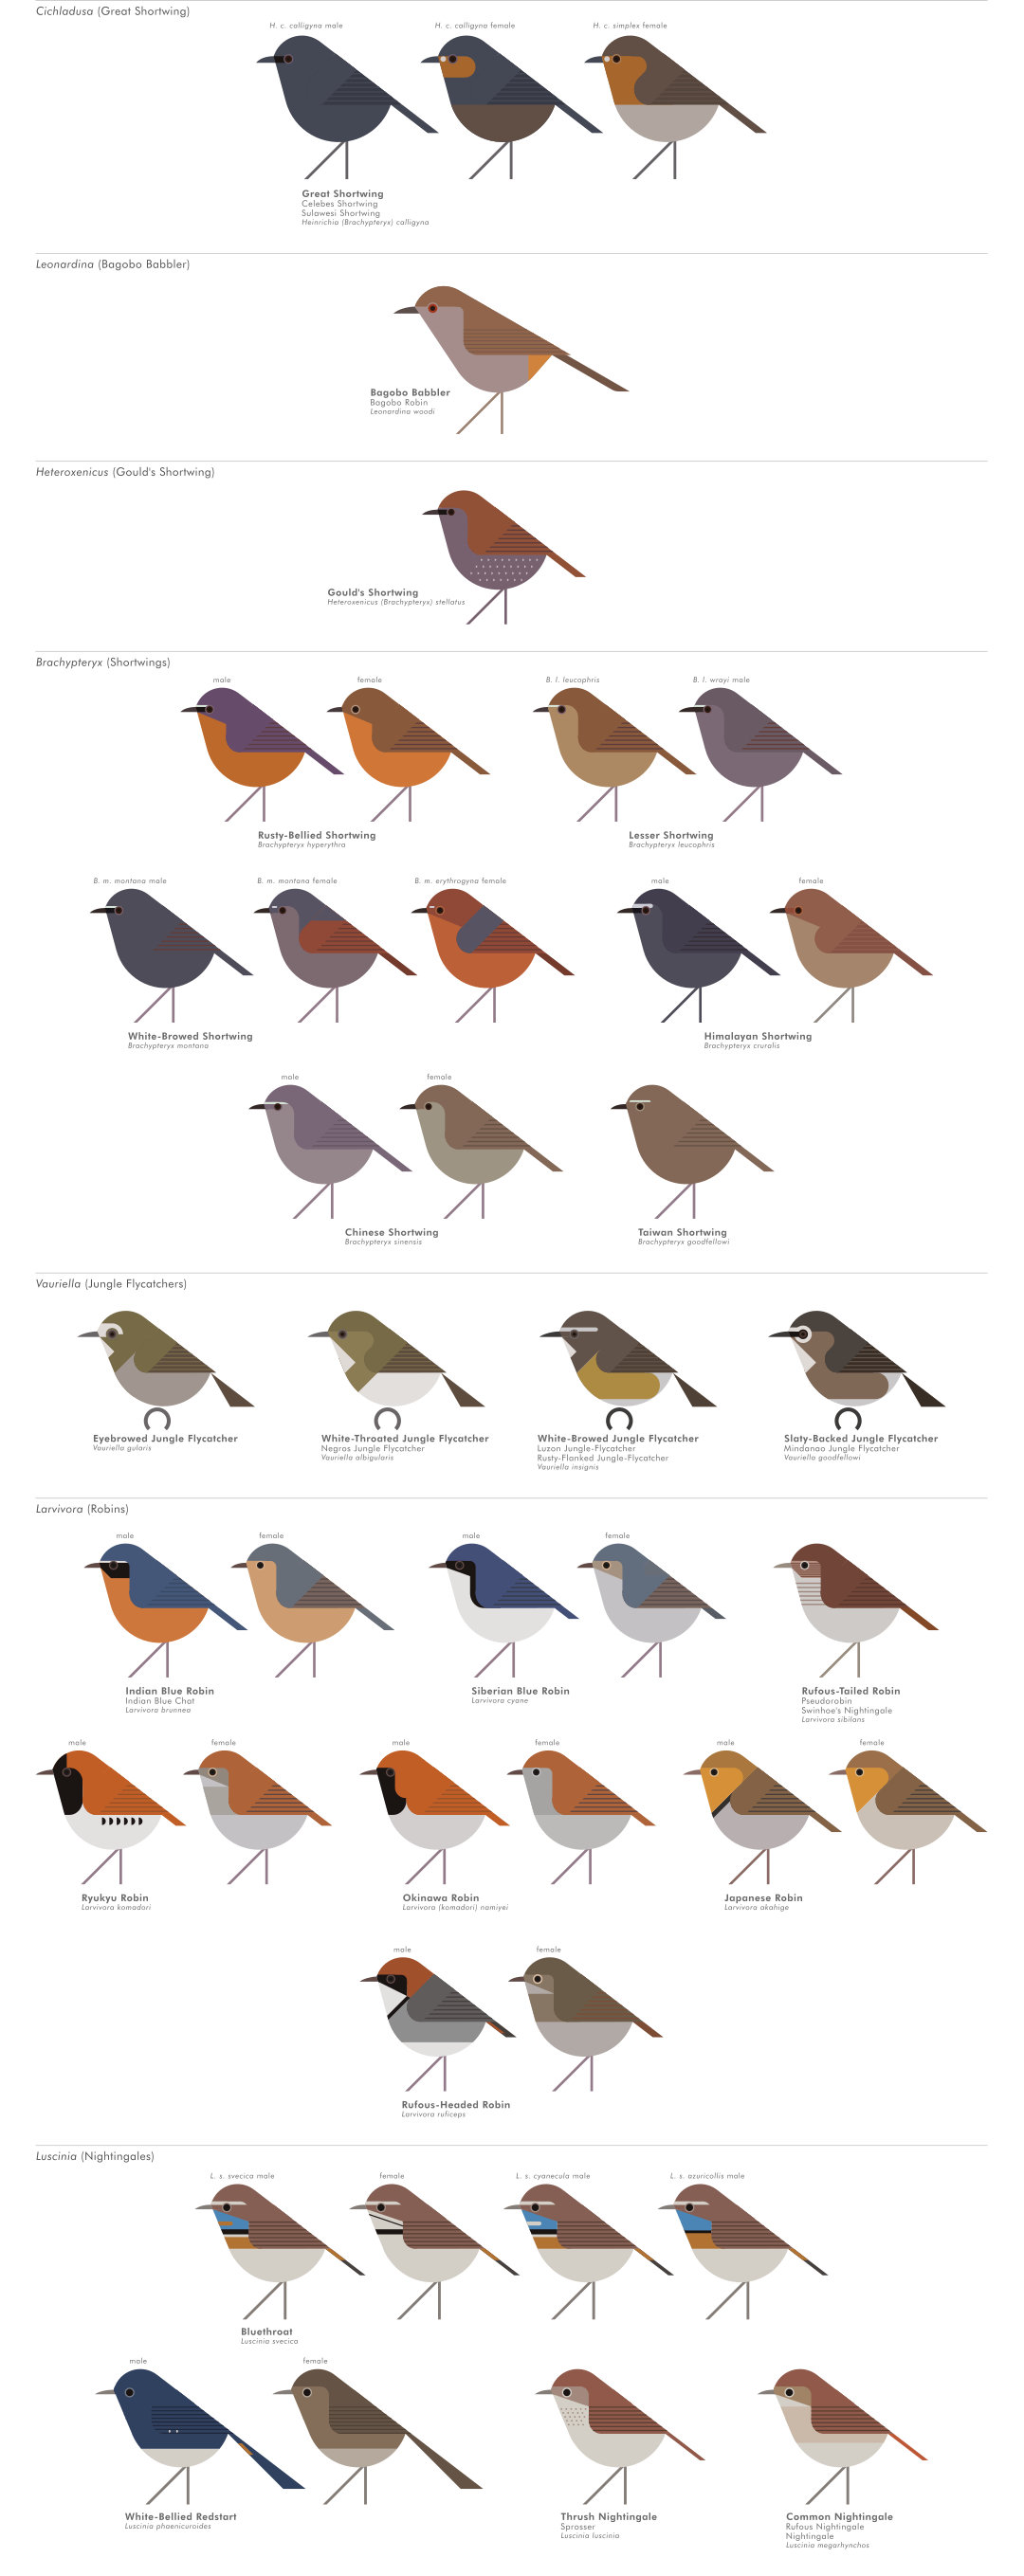 scott partridge - AVE - avian vector encyclopedia - old world flycatchers - bird vector art